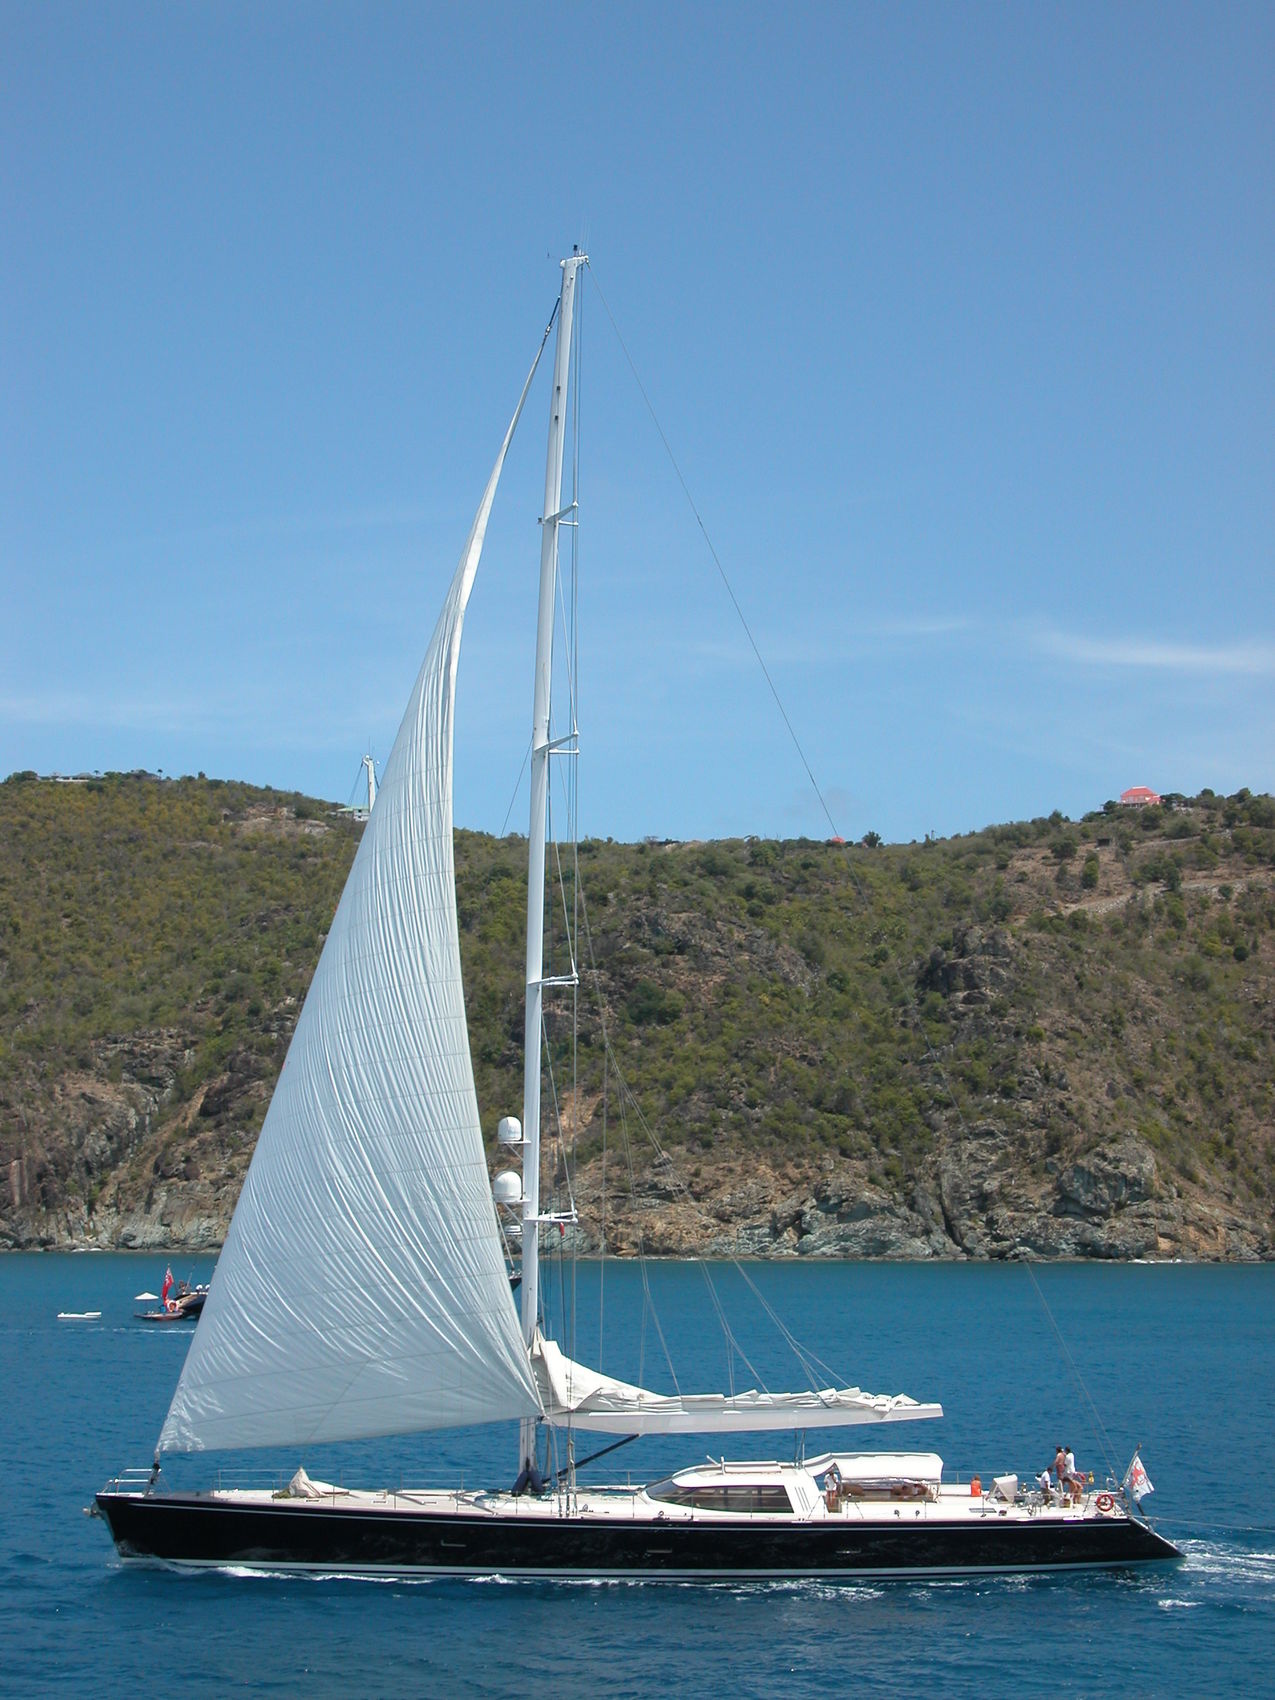 sailing yacht vaimiti